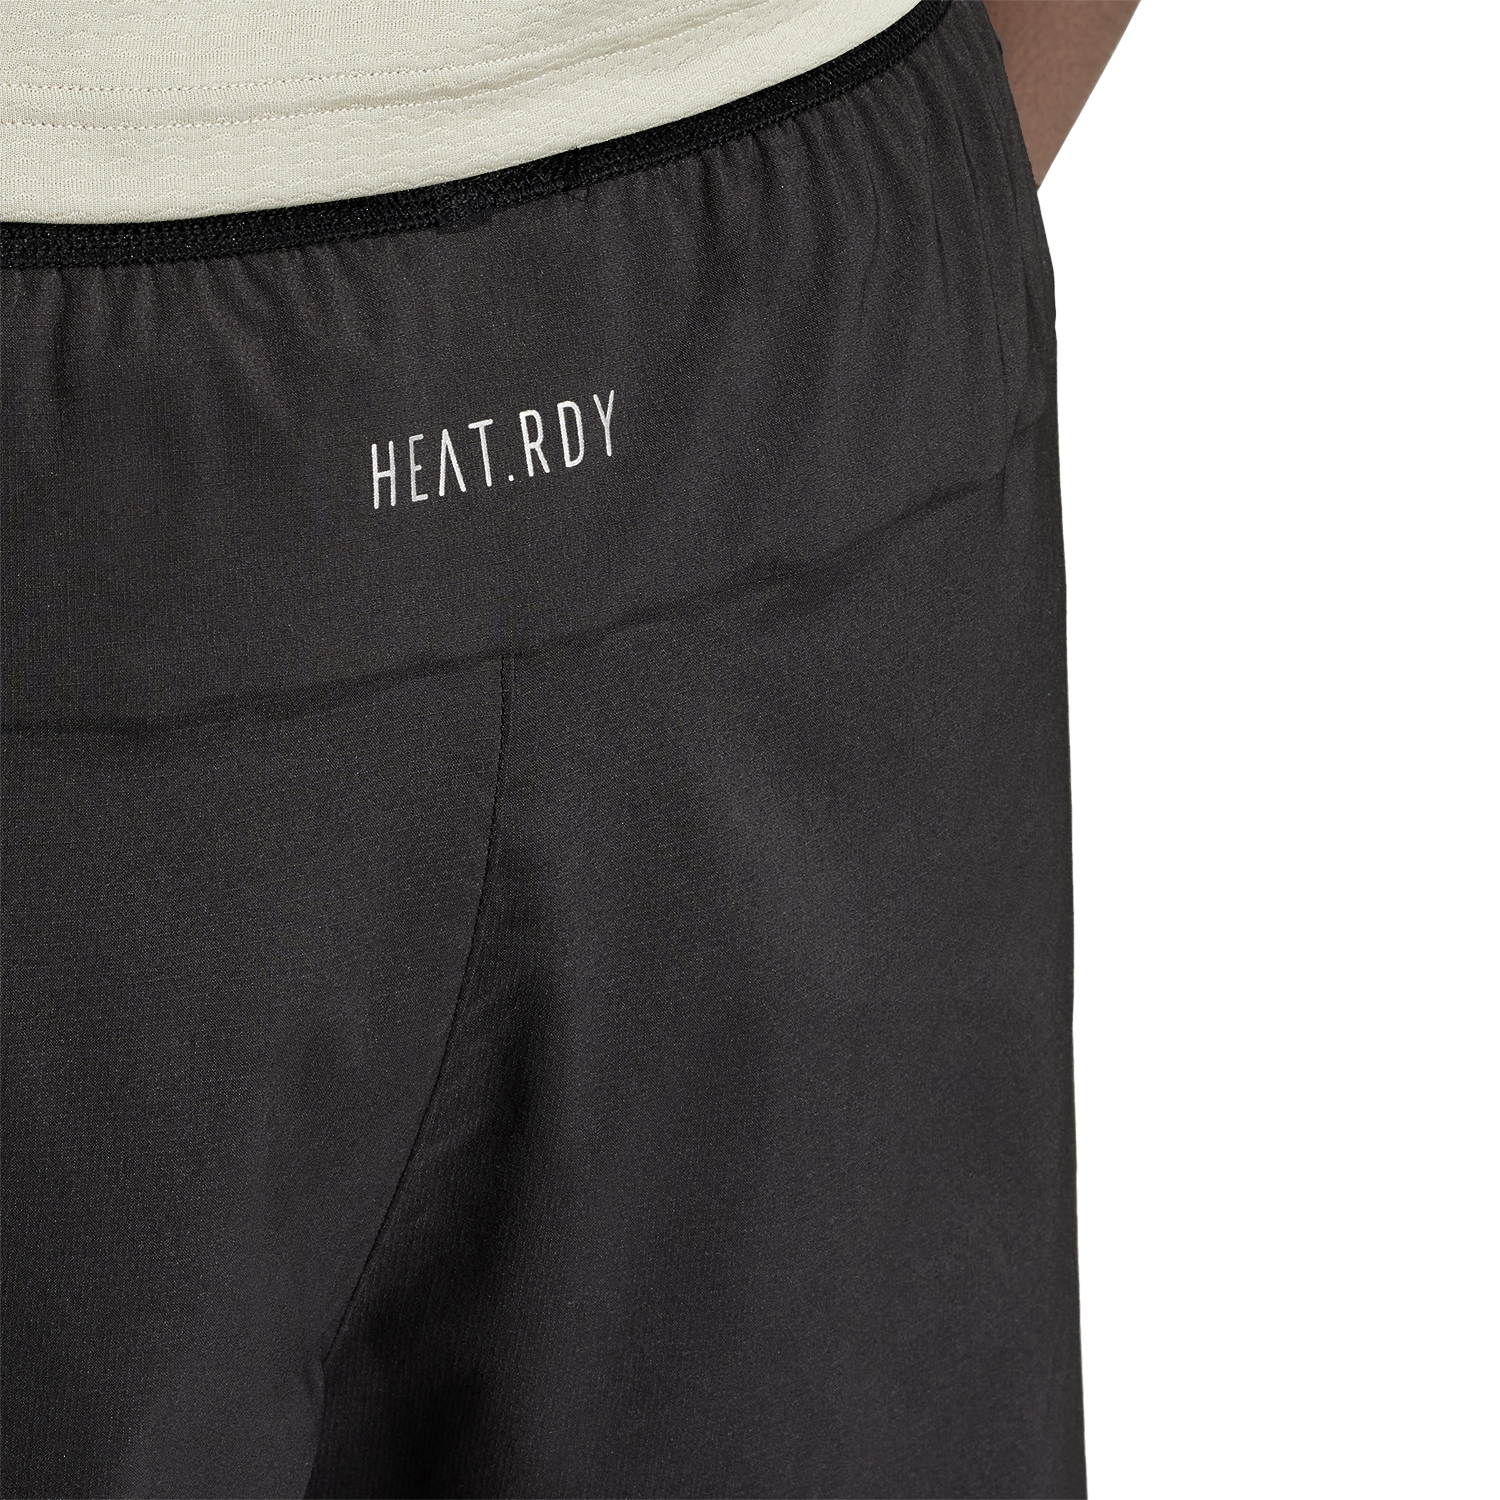 adidas HIIT Heat.RDY 2 in 1 5in Pantaloncini - Black/Segrsp